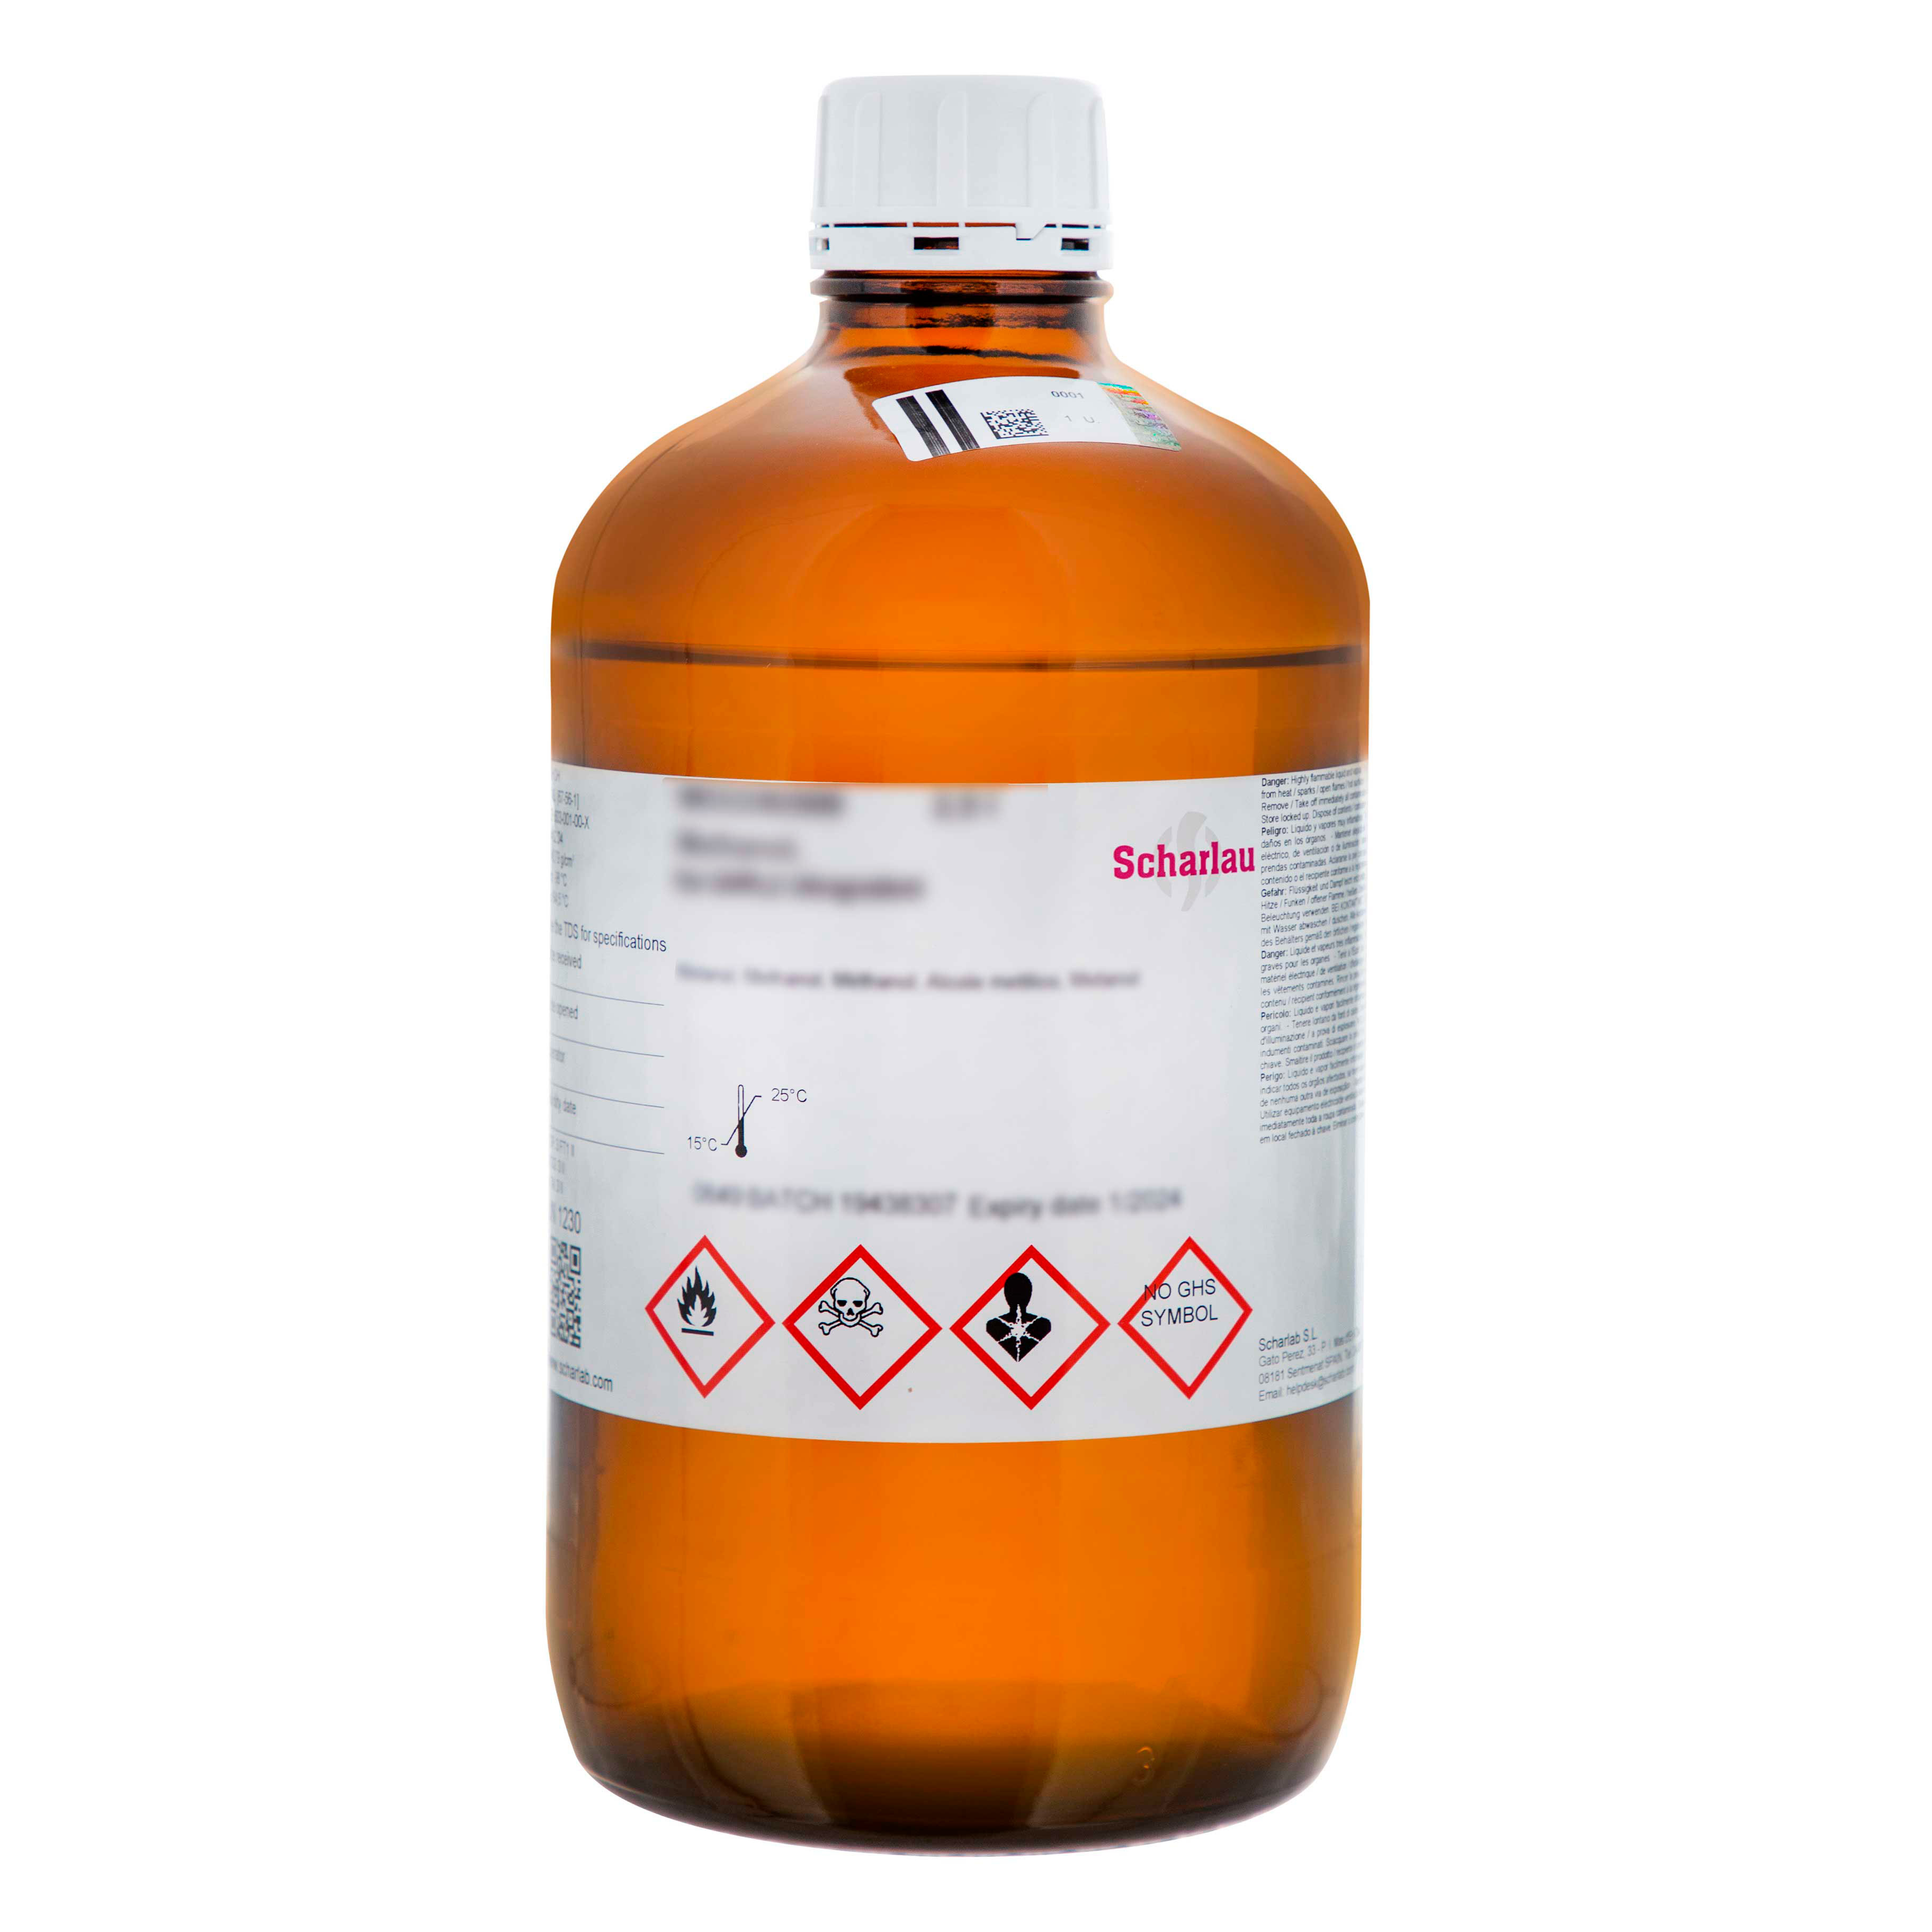 Éter dietílico, EssentQ®, estabilizado con aprox.7 ppm de 2,6-Di-terc-butil-4-metilfenol (BHT)